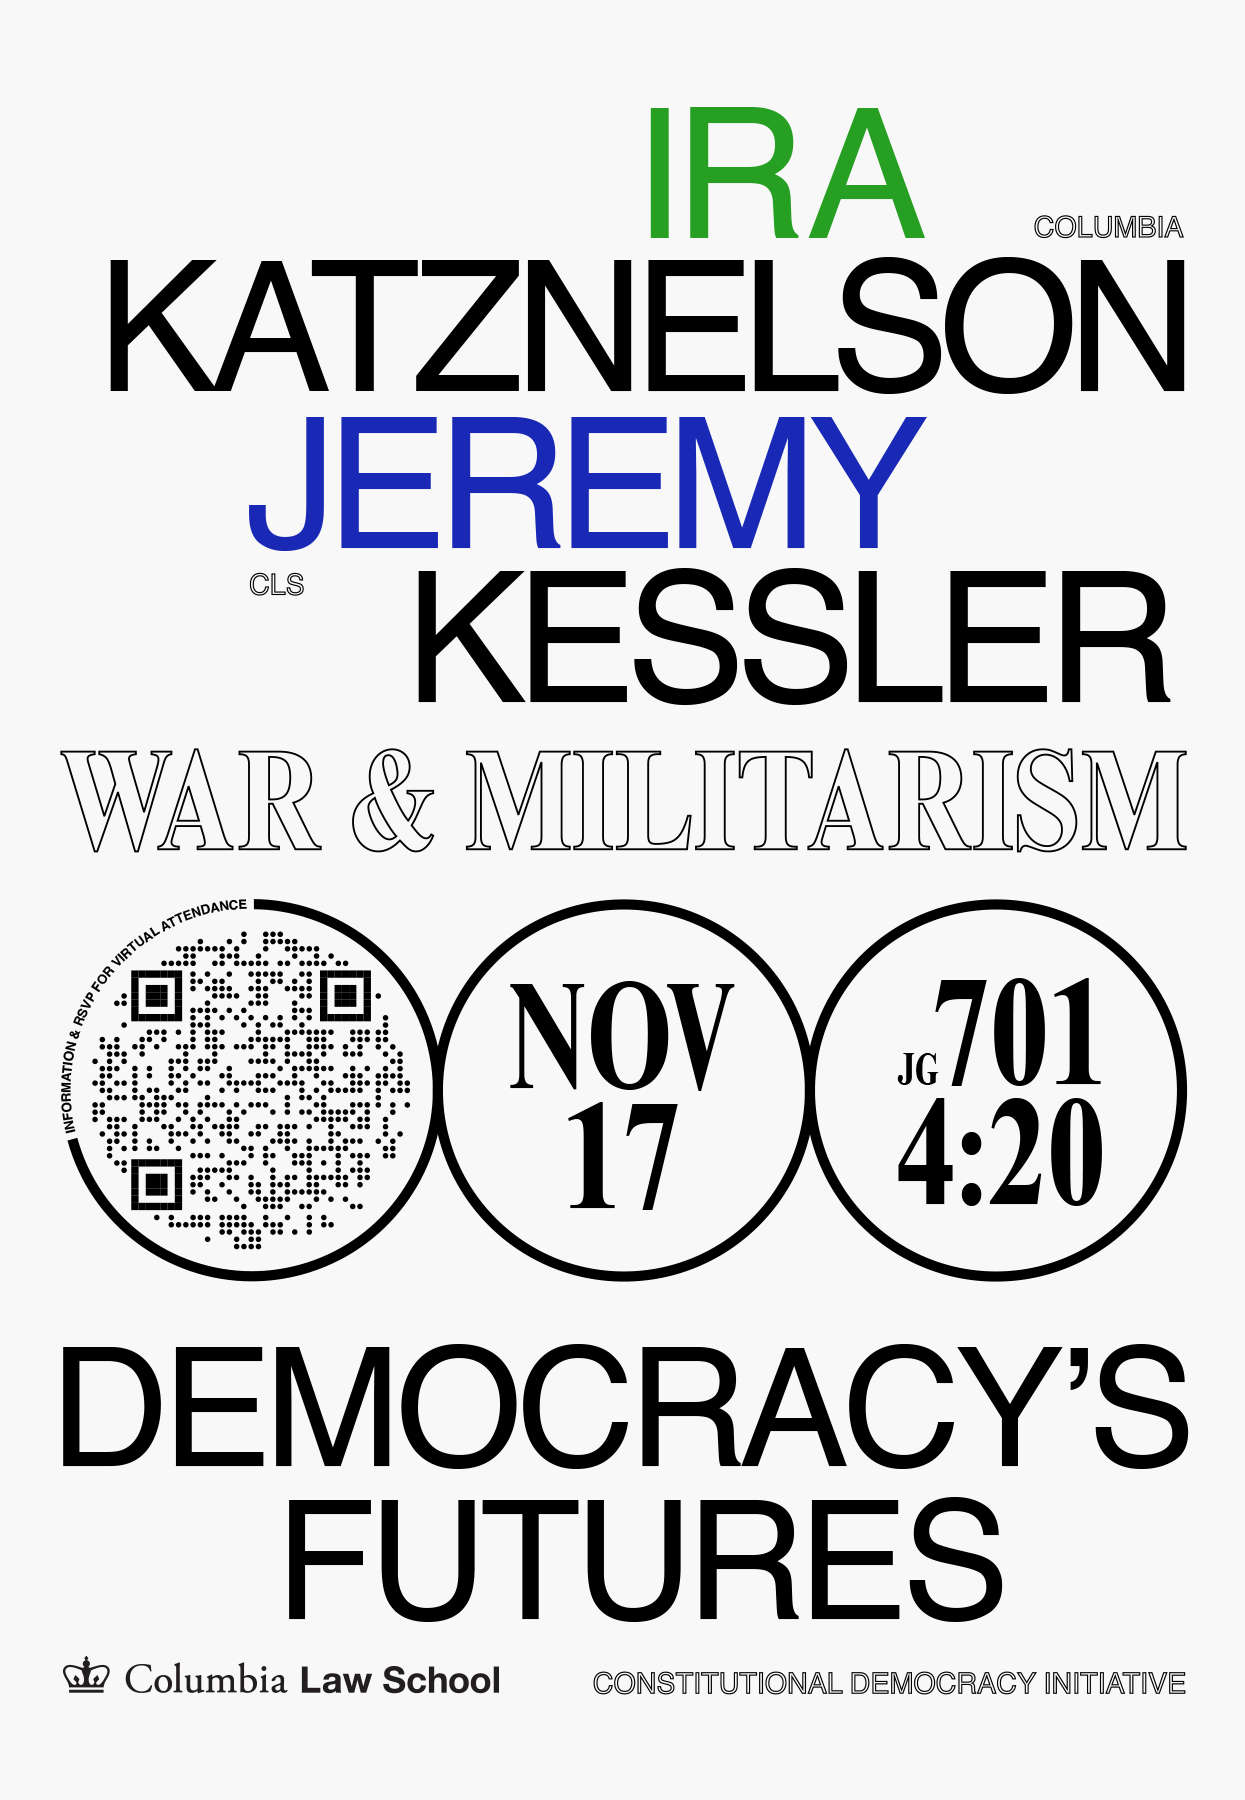 Democracy's Futures - "War & Militarism"